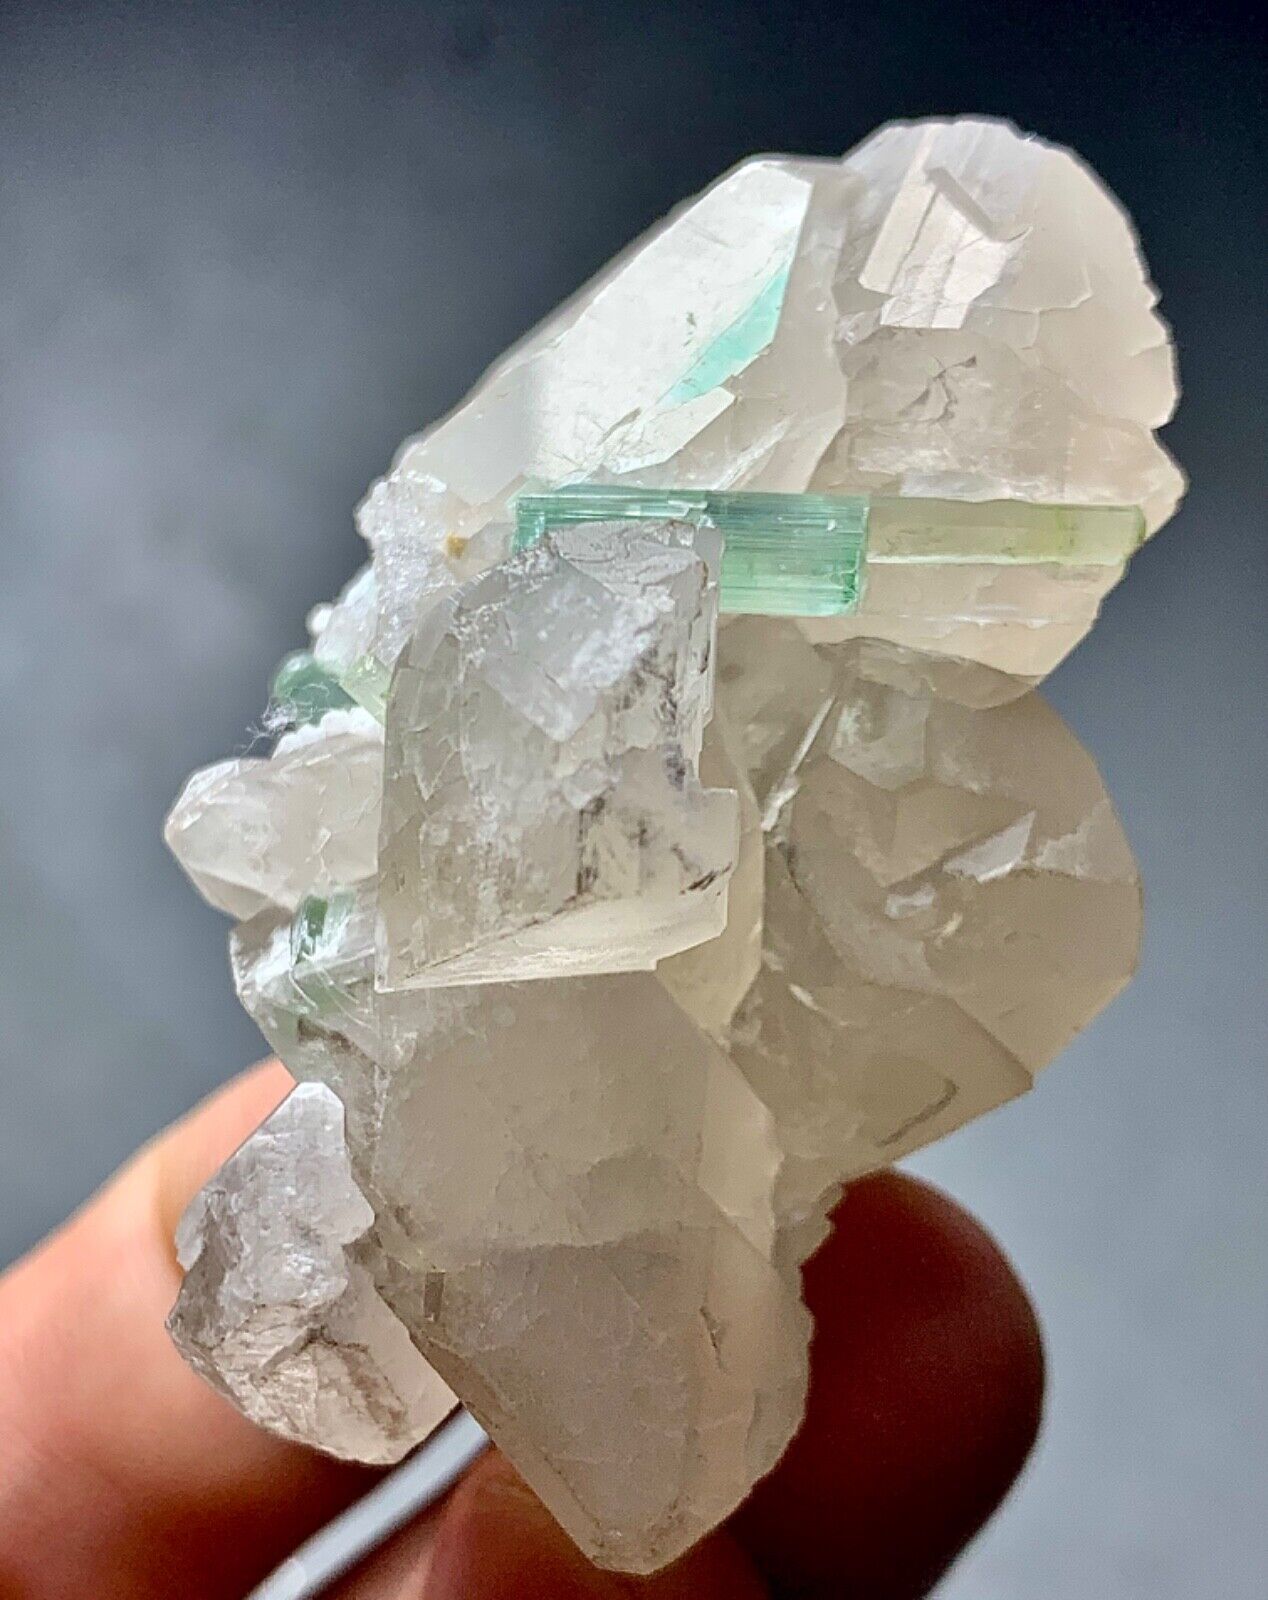 260 Carat Tourmaline Crystal On Quartz Specimen From Afghanistan